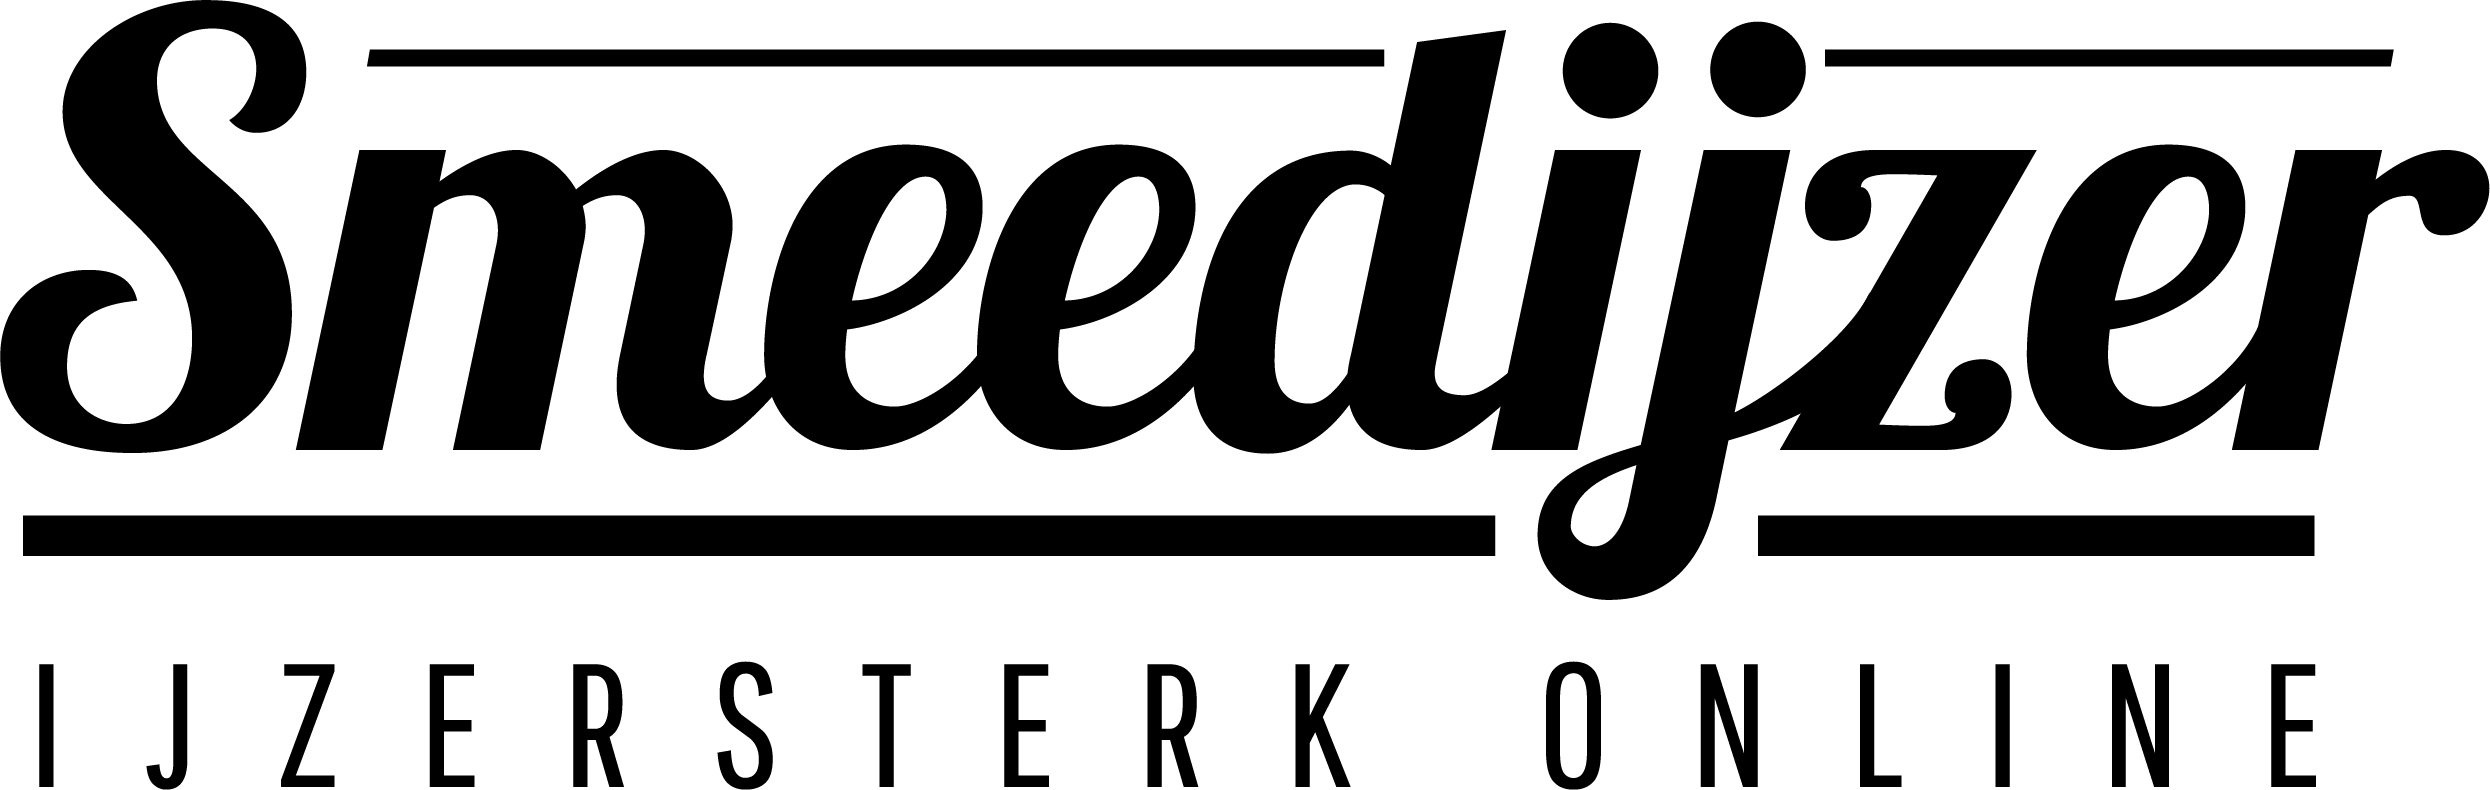 Smeedijzer Internet logo